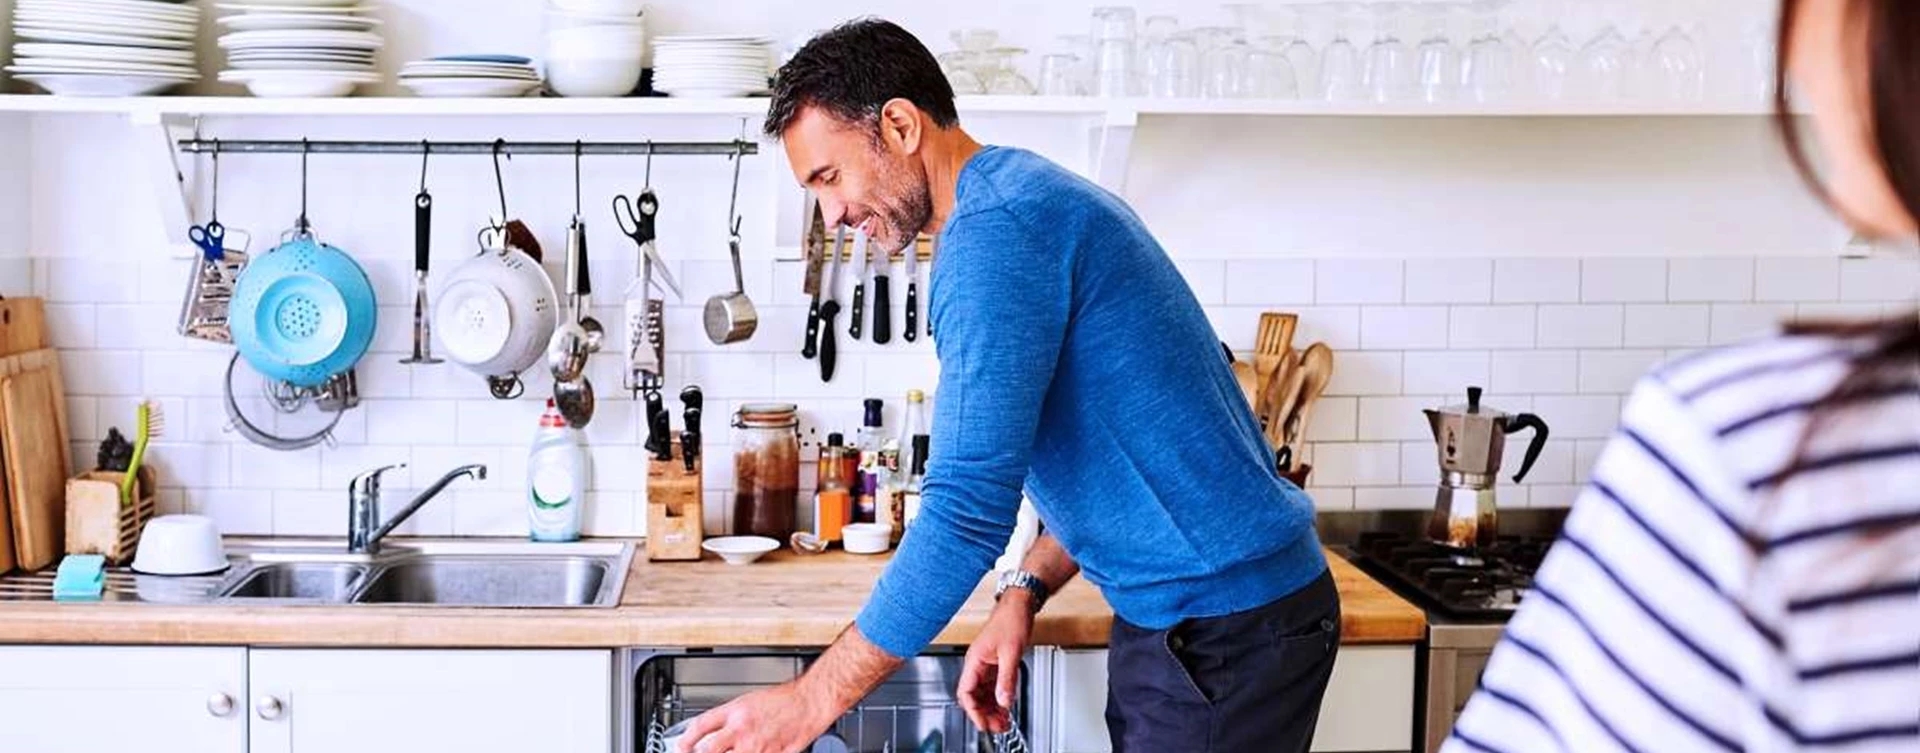 Man putting dirty coffee mugs into dishwasher in kitchen